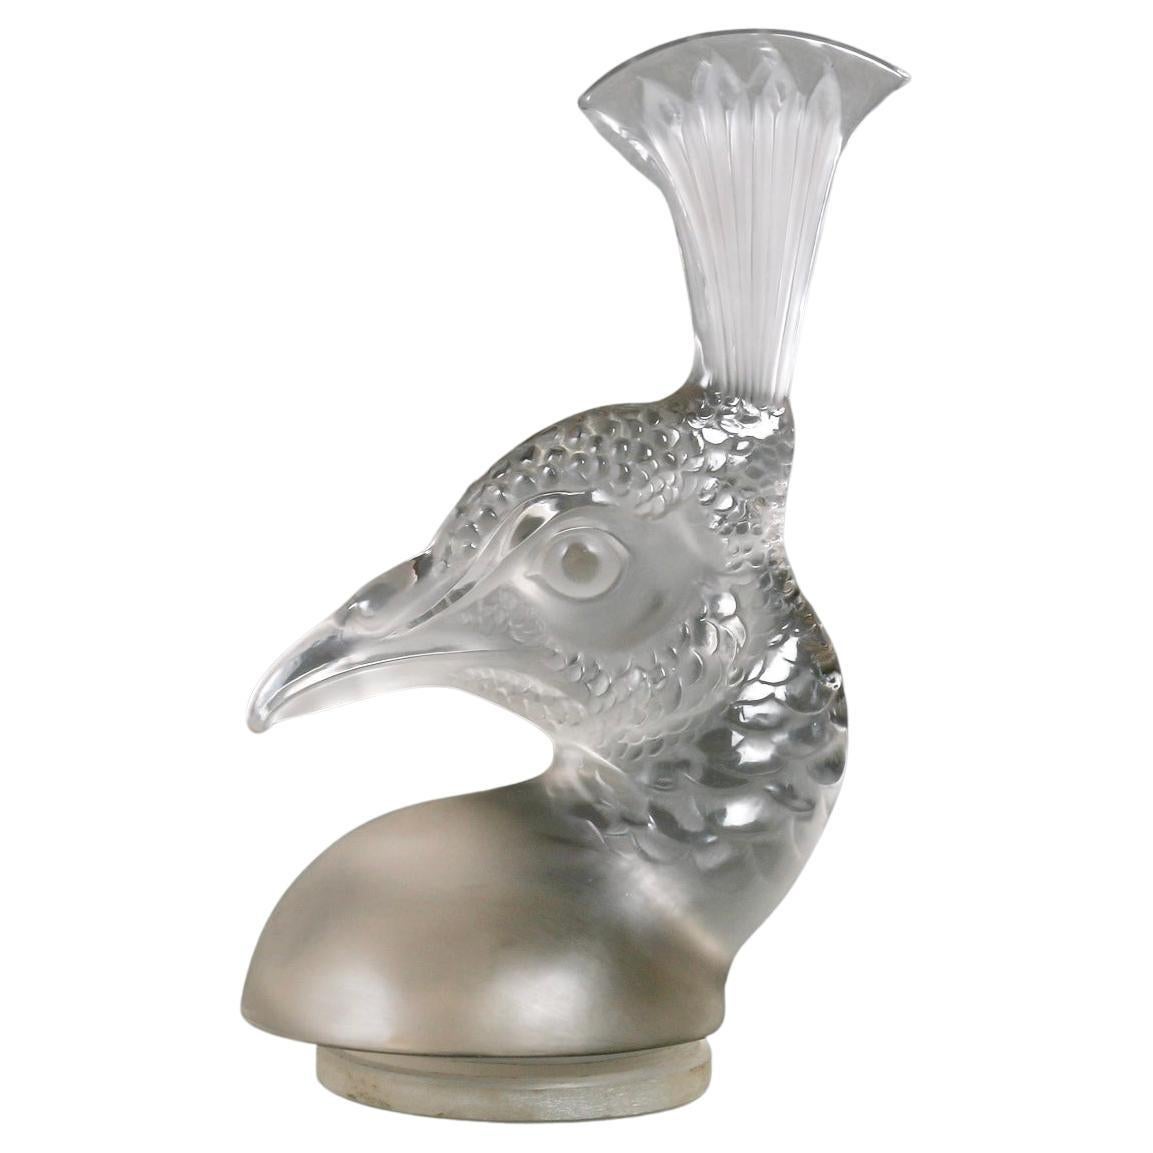 1928 René Lalique - Car Mascot Tete De Paon Peacock Glass